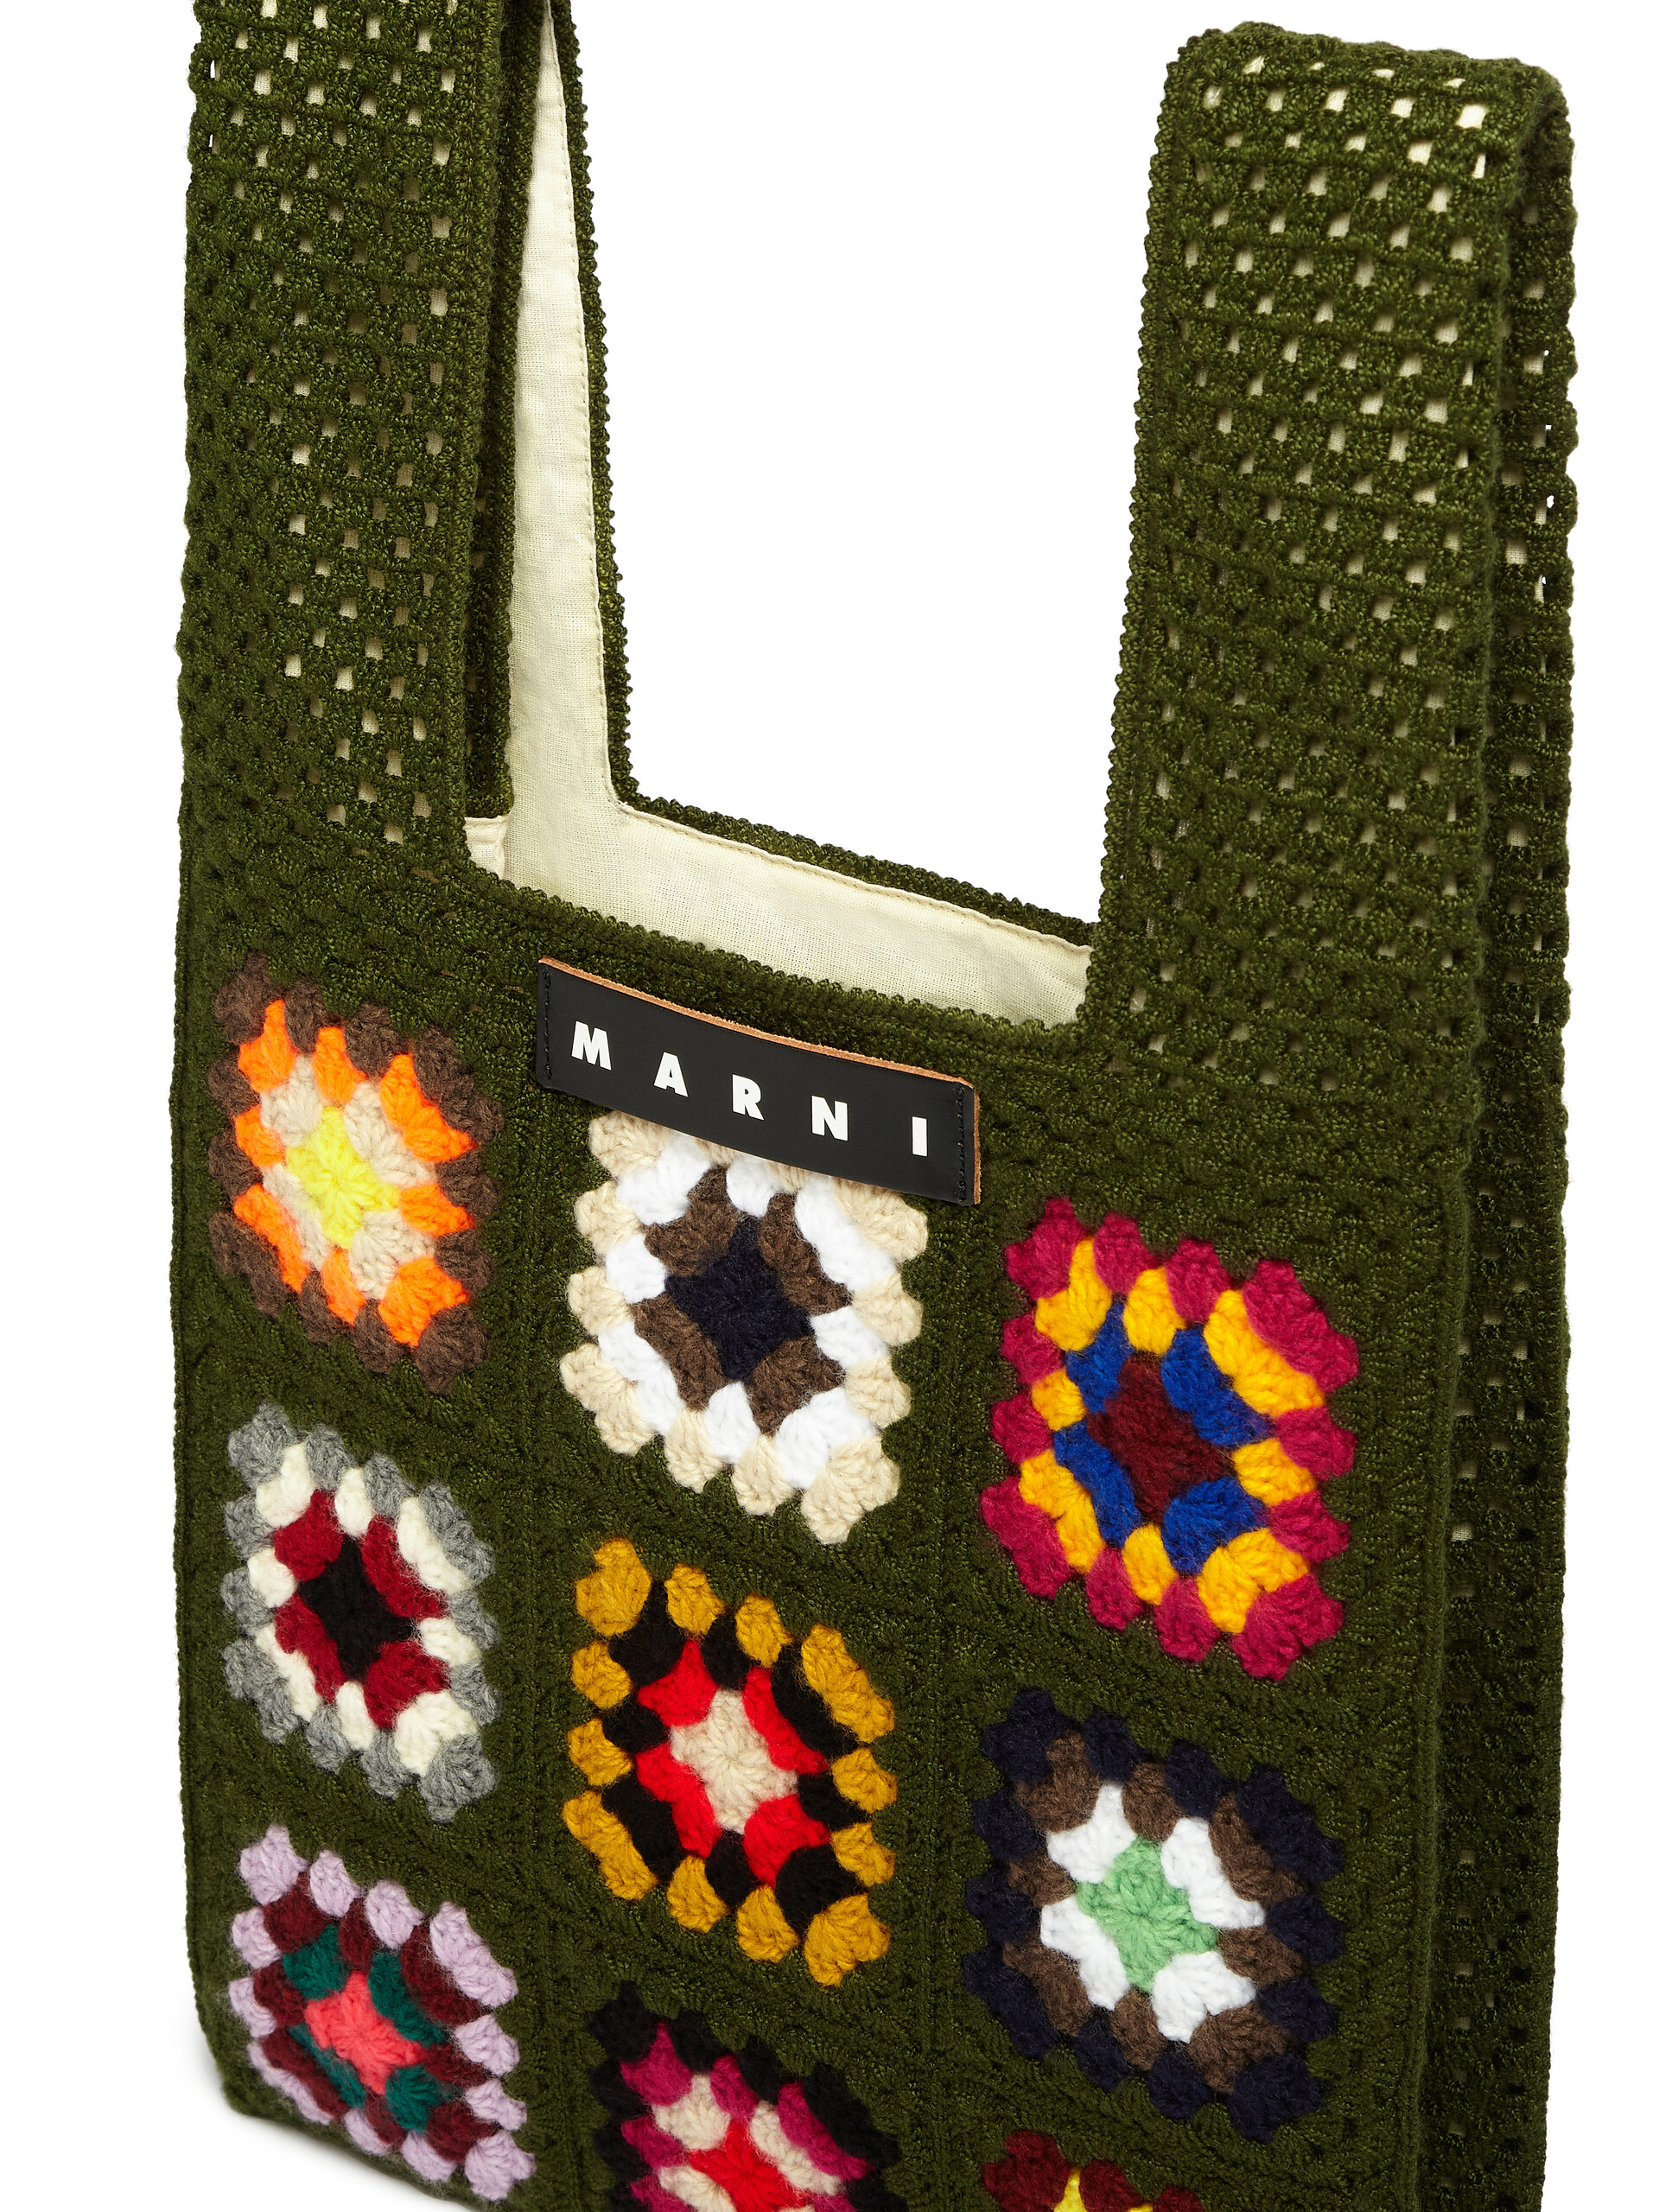 MARNI MARKET FISH bag in green crochet - Bags - Image 4